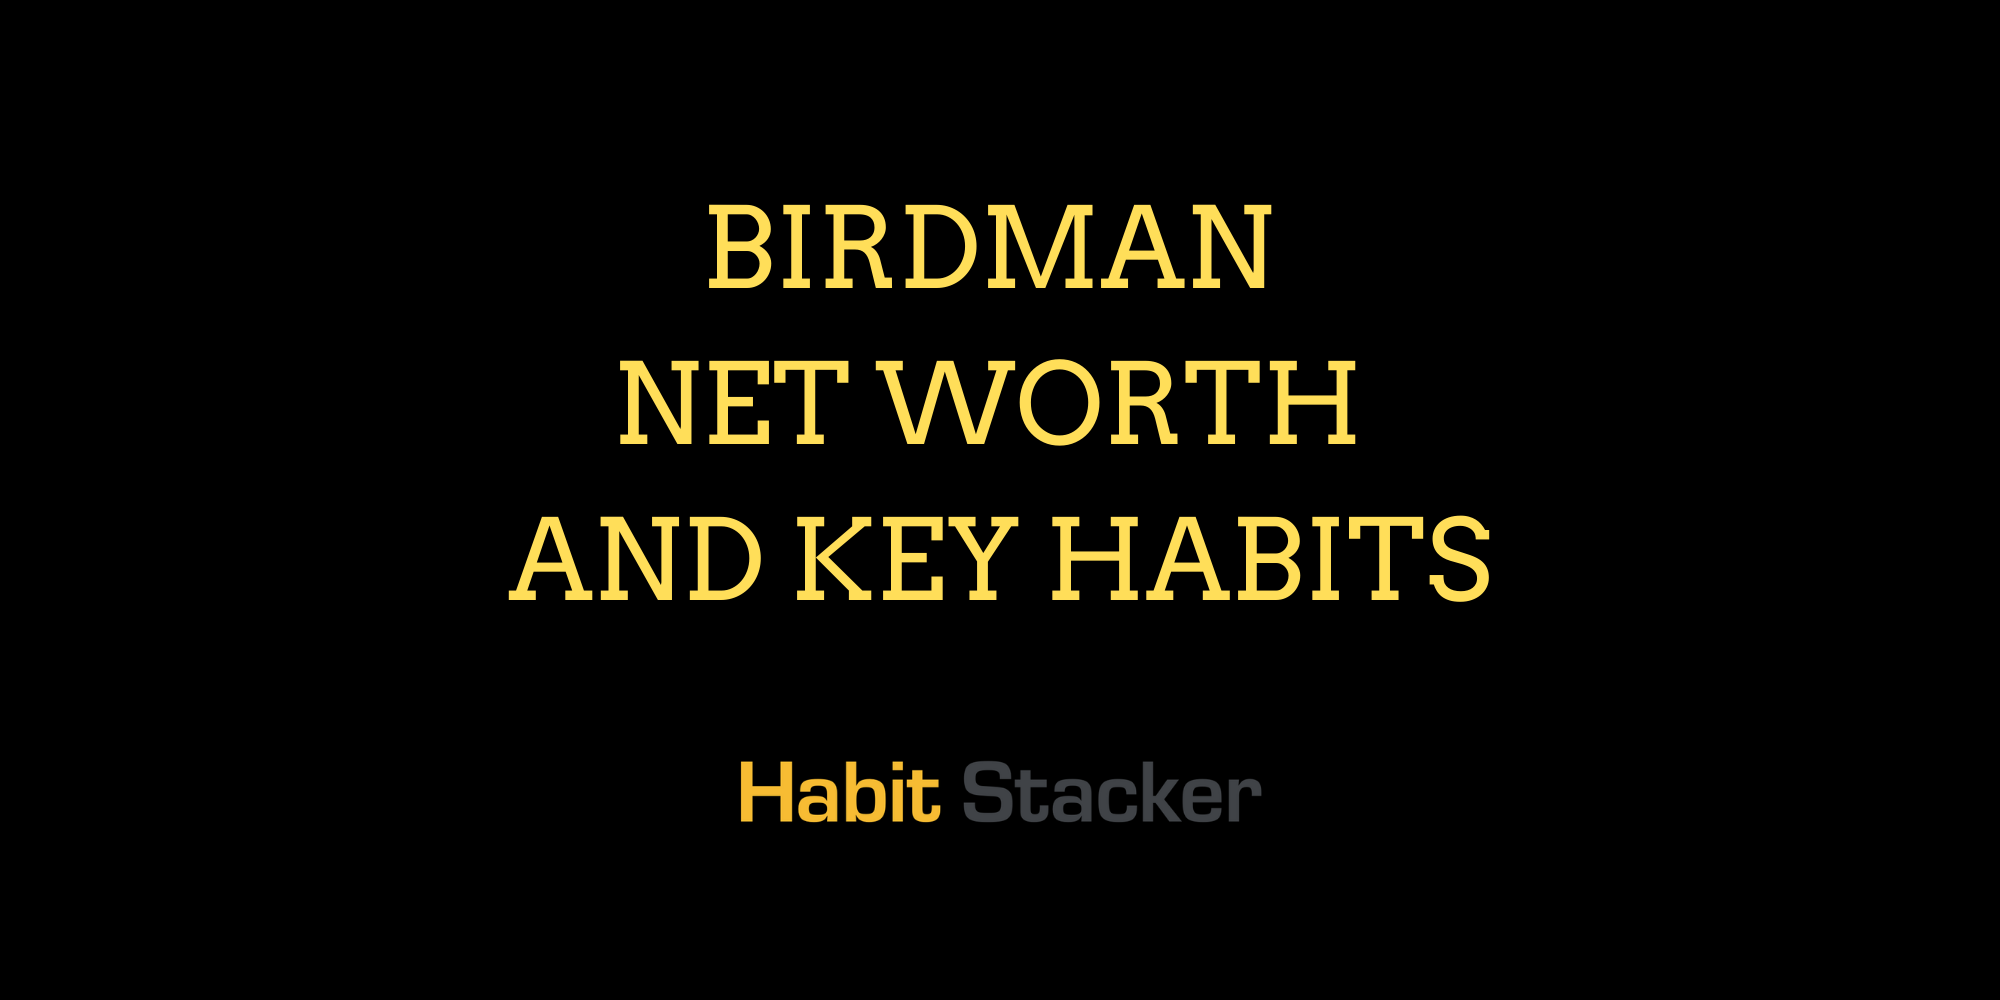 Birdman Net Worth and Key Habits